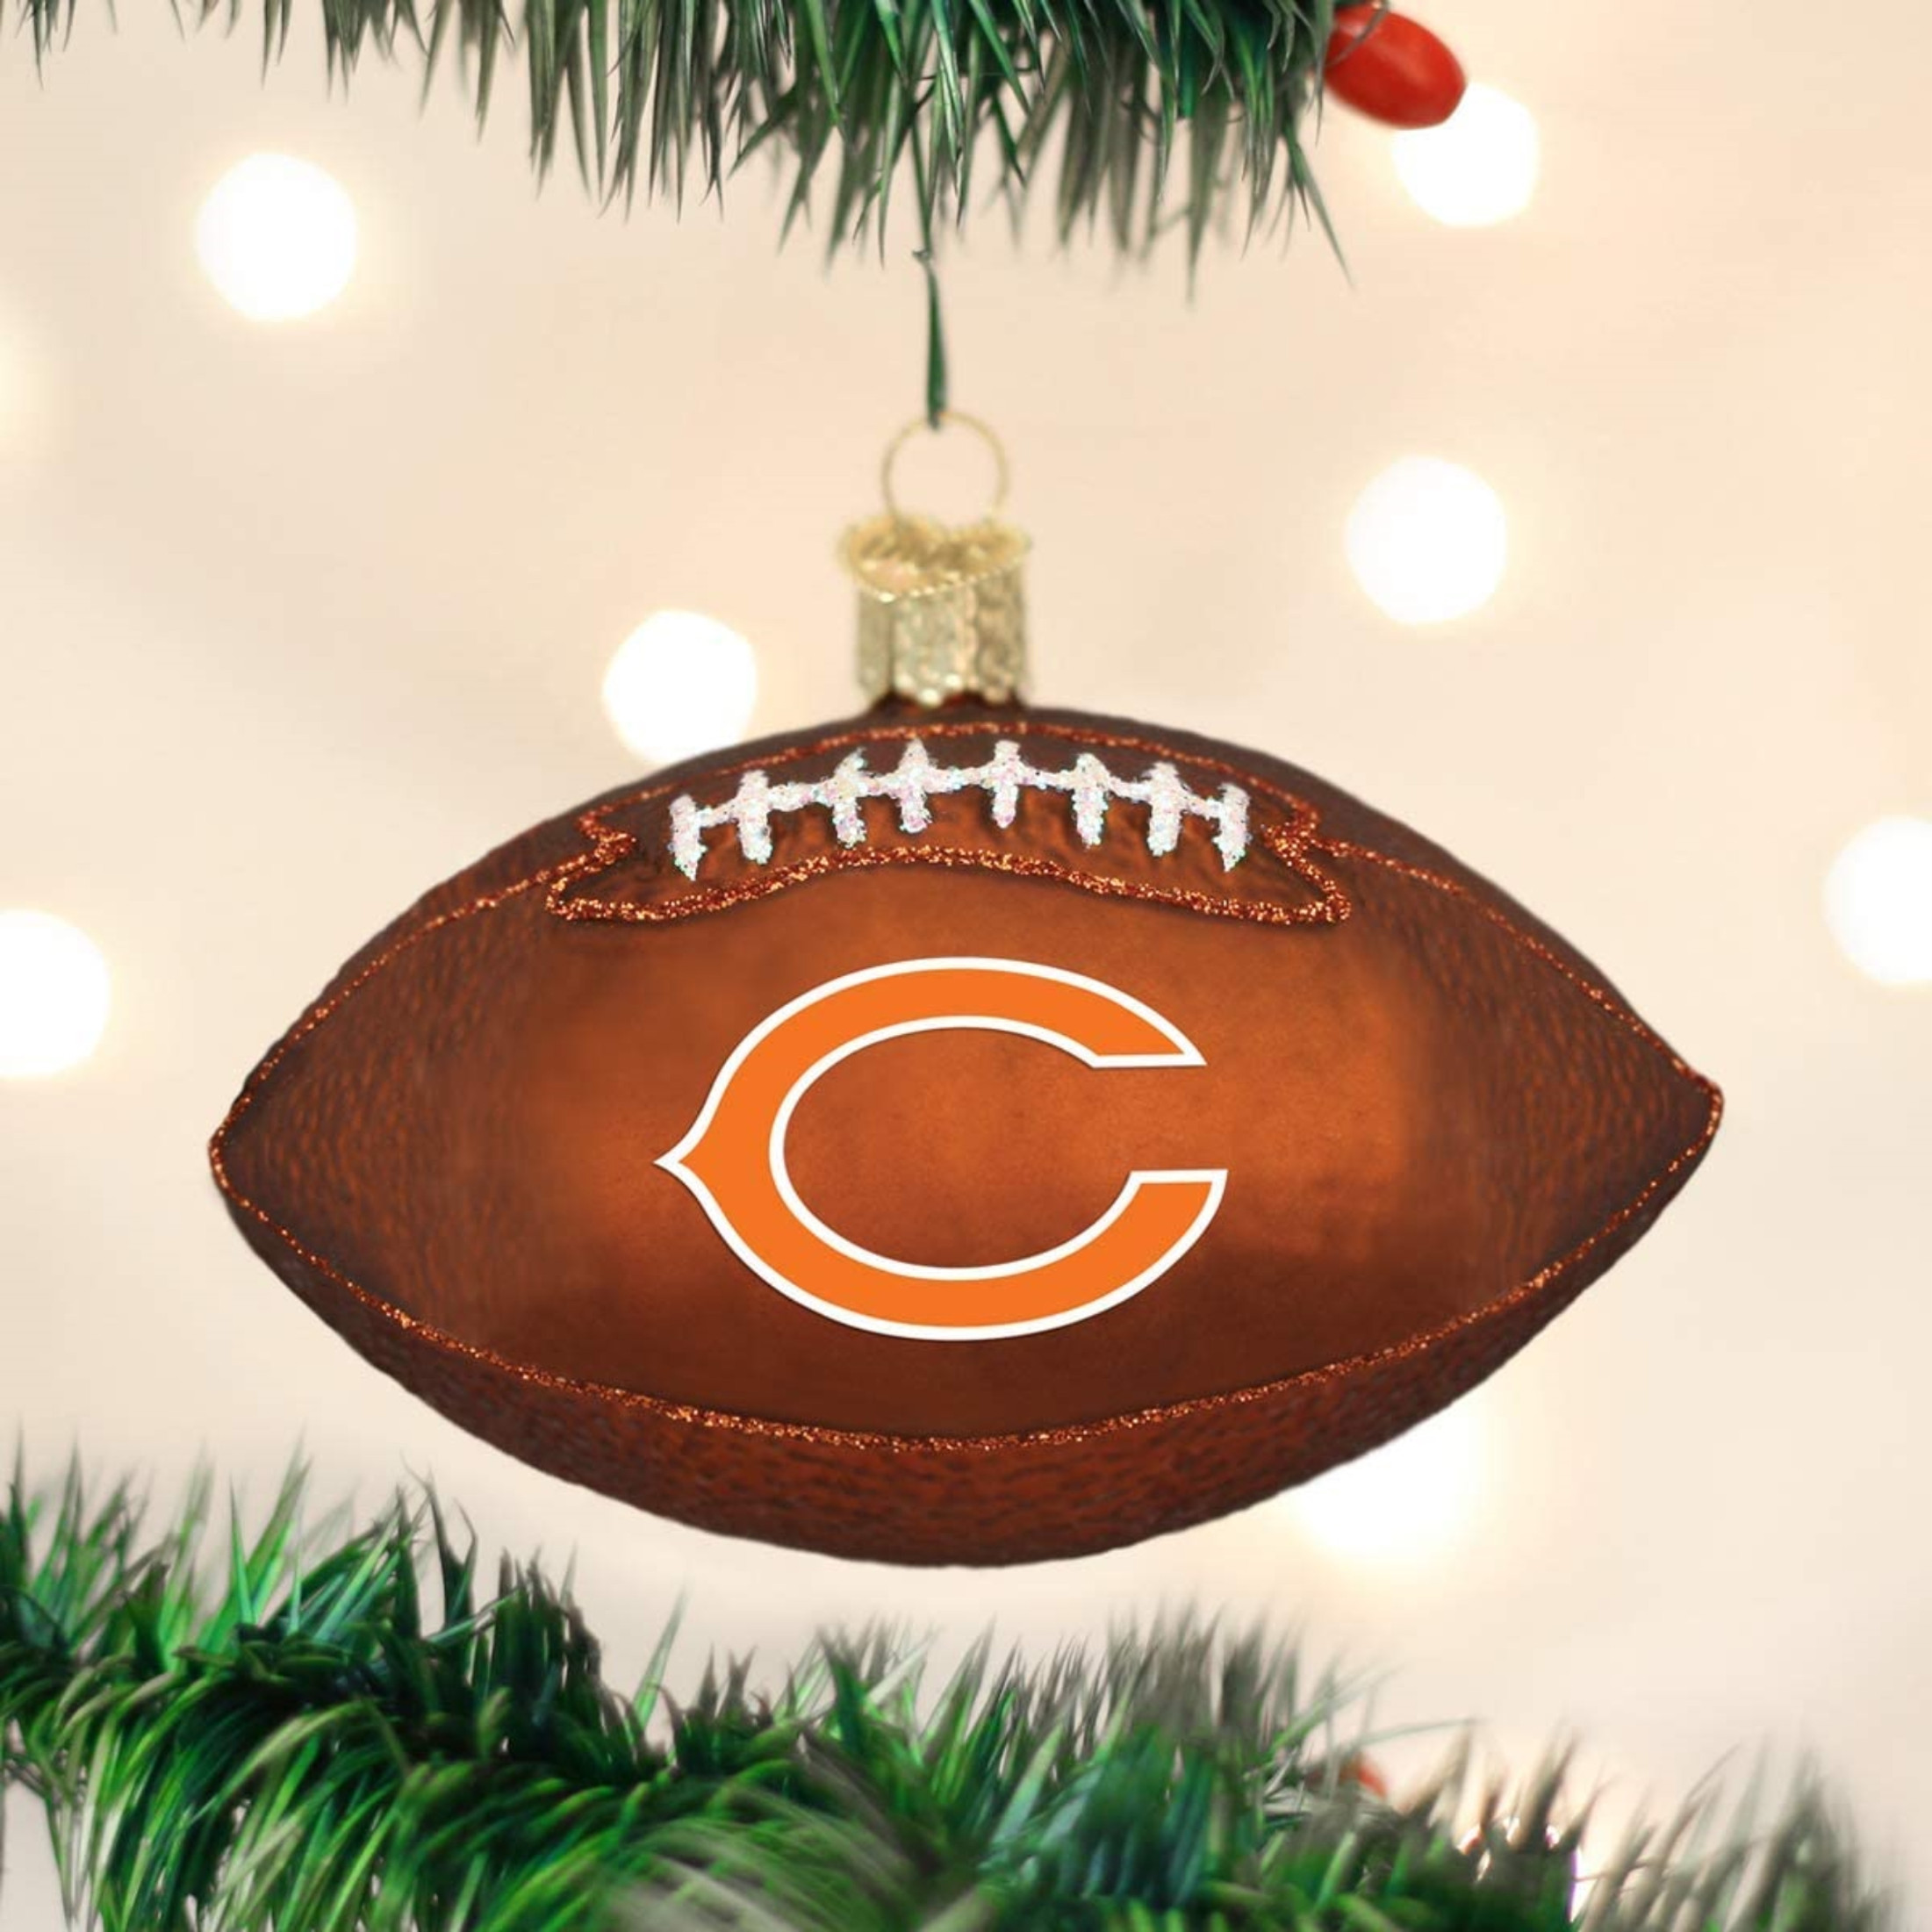 Old World Christmas Chicago Bears Football Ornament For Christmas Tree